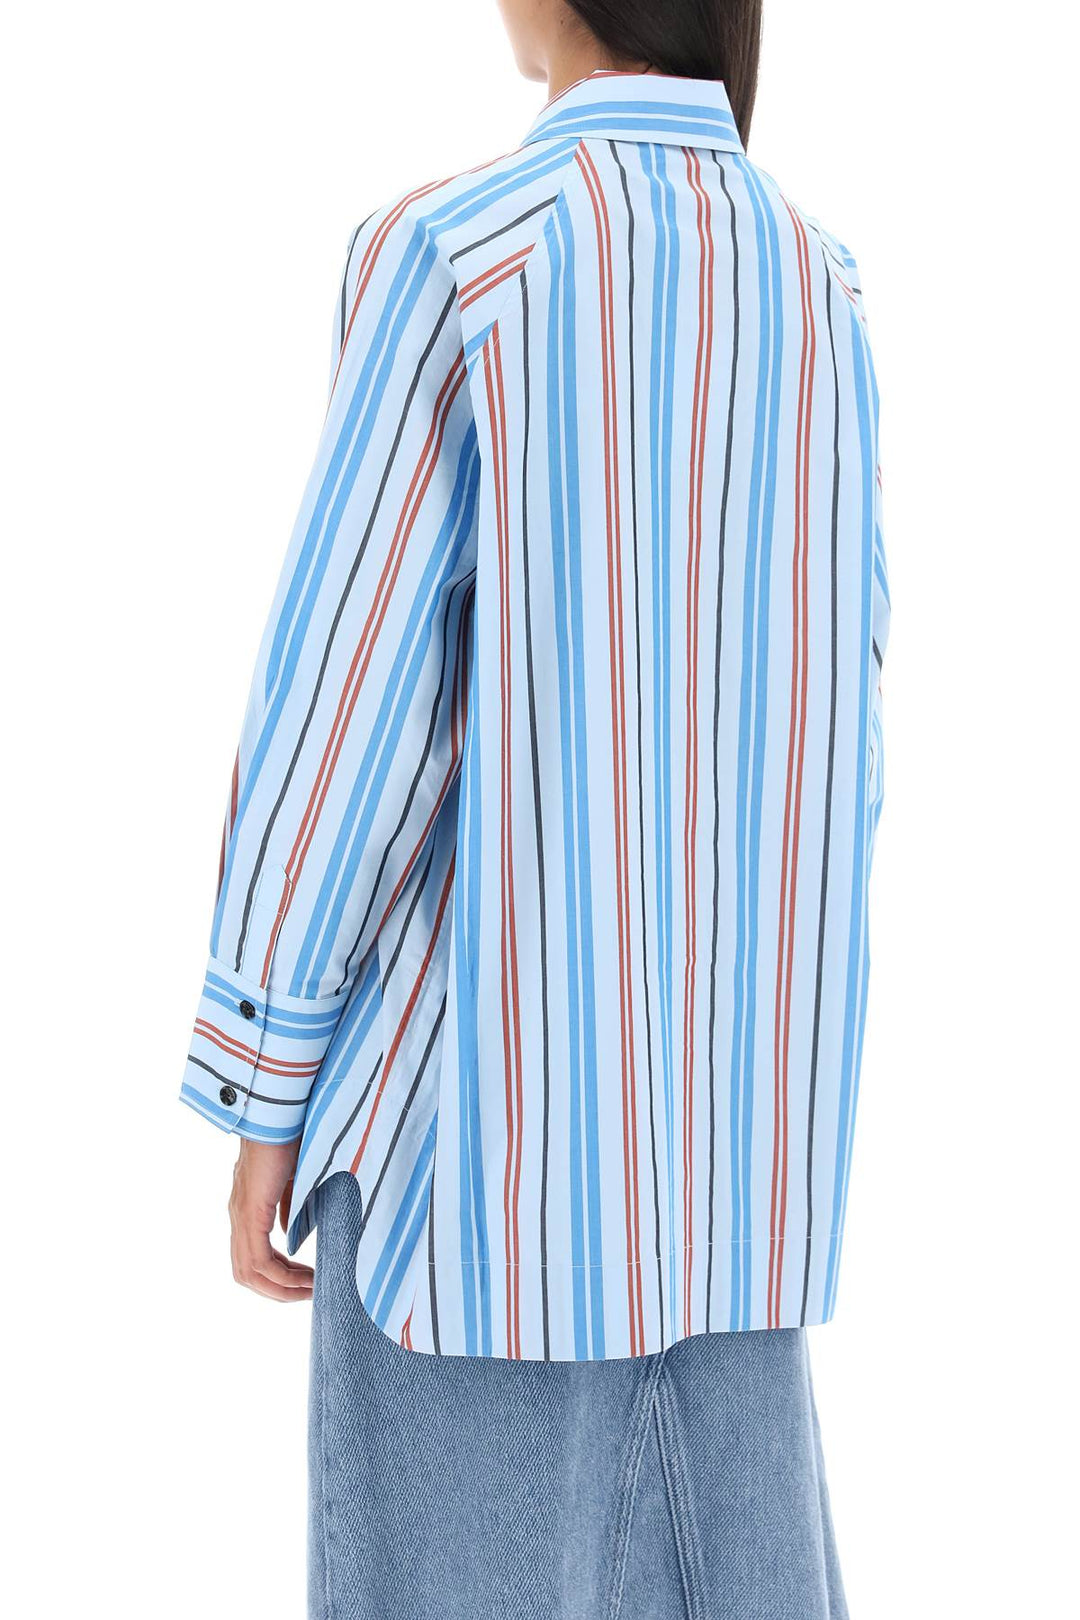 Ganni Oversized Striped Shirt   Celeste